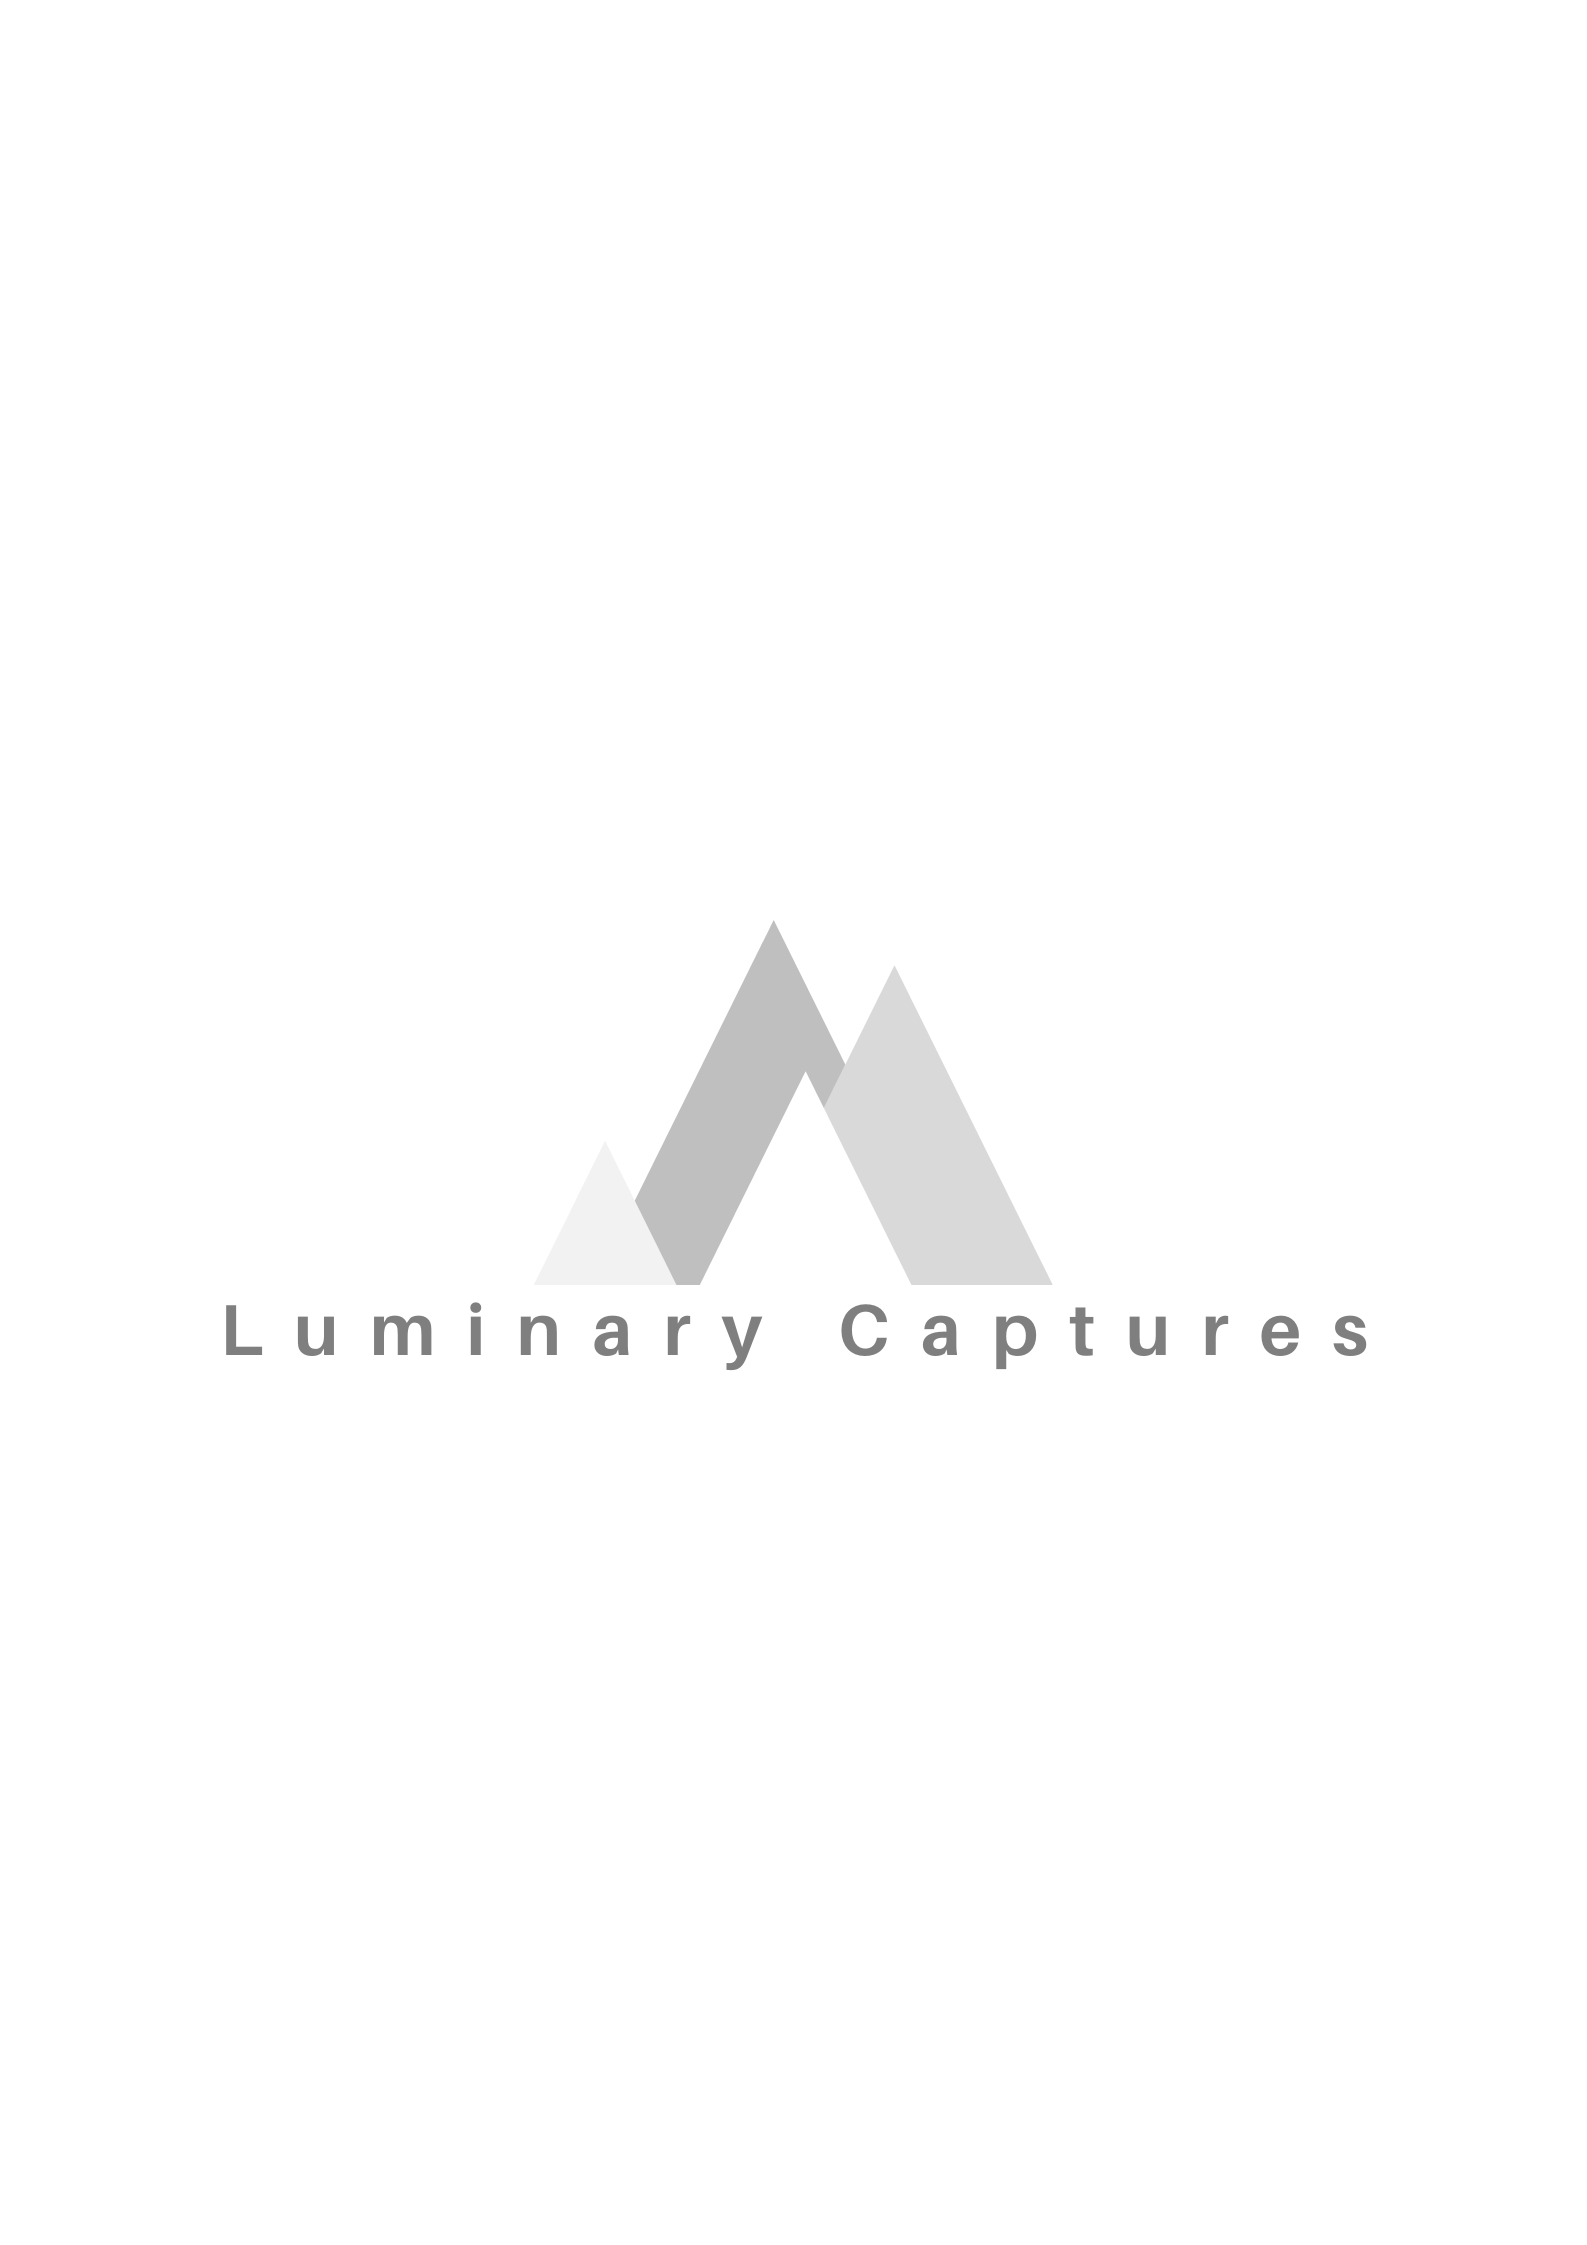 Luminary Captures | Wade Wilson